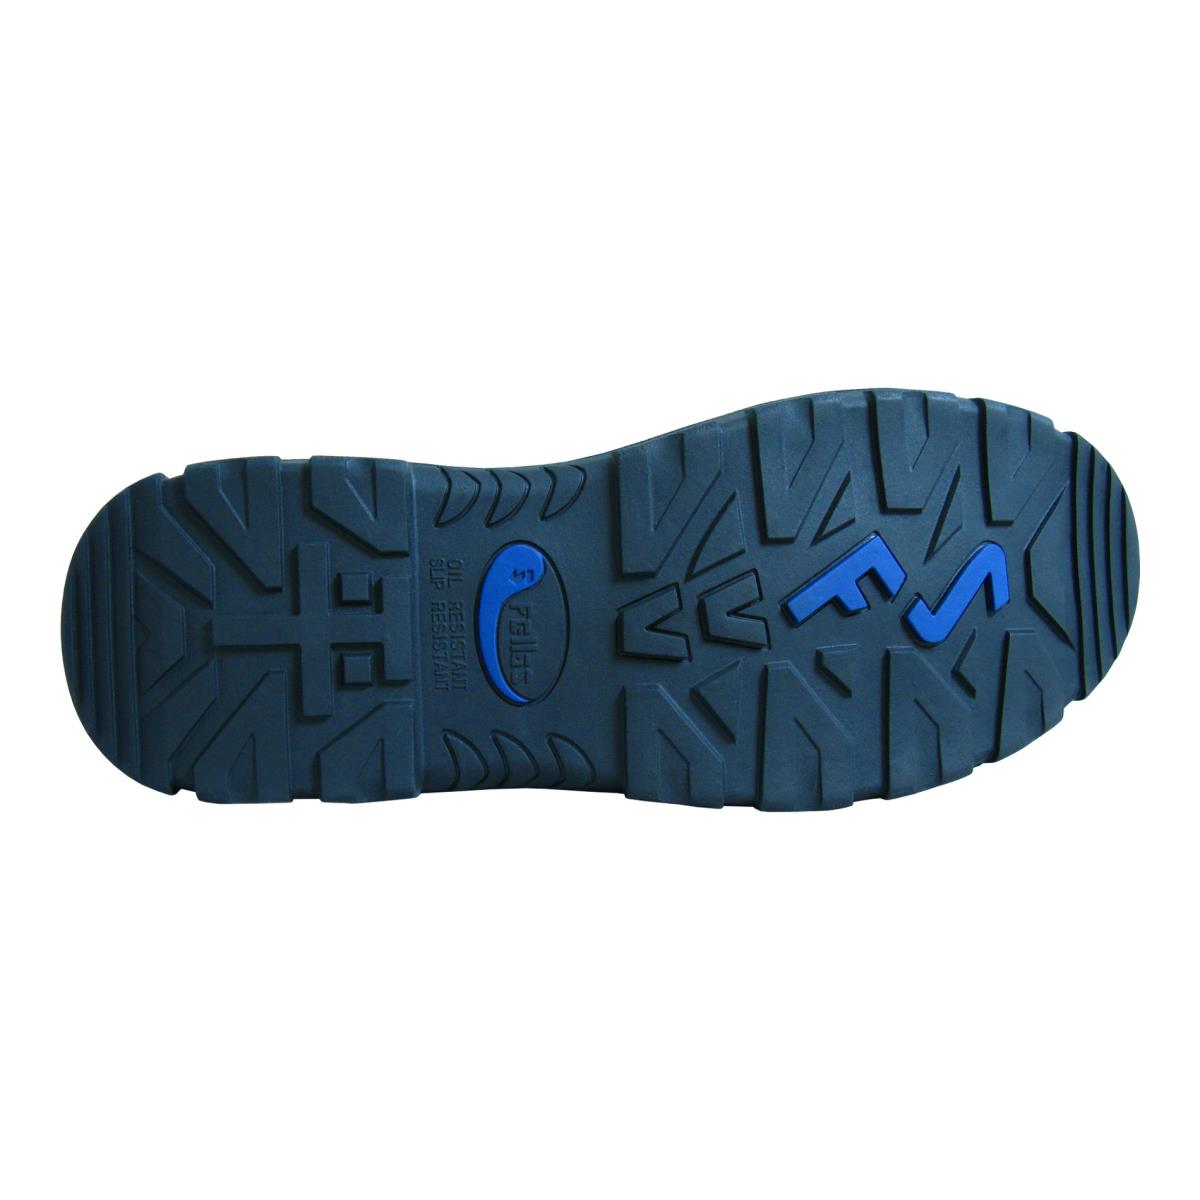 Genuine Grip Footwear- 6050, 6051 & 6052 Poseidon Comp Toe Waterproof Men's Boot-eSafety Supplies, Inc